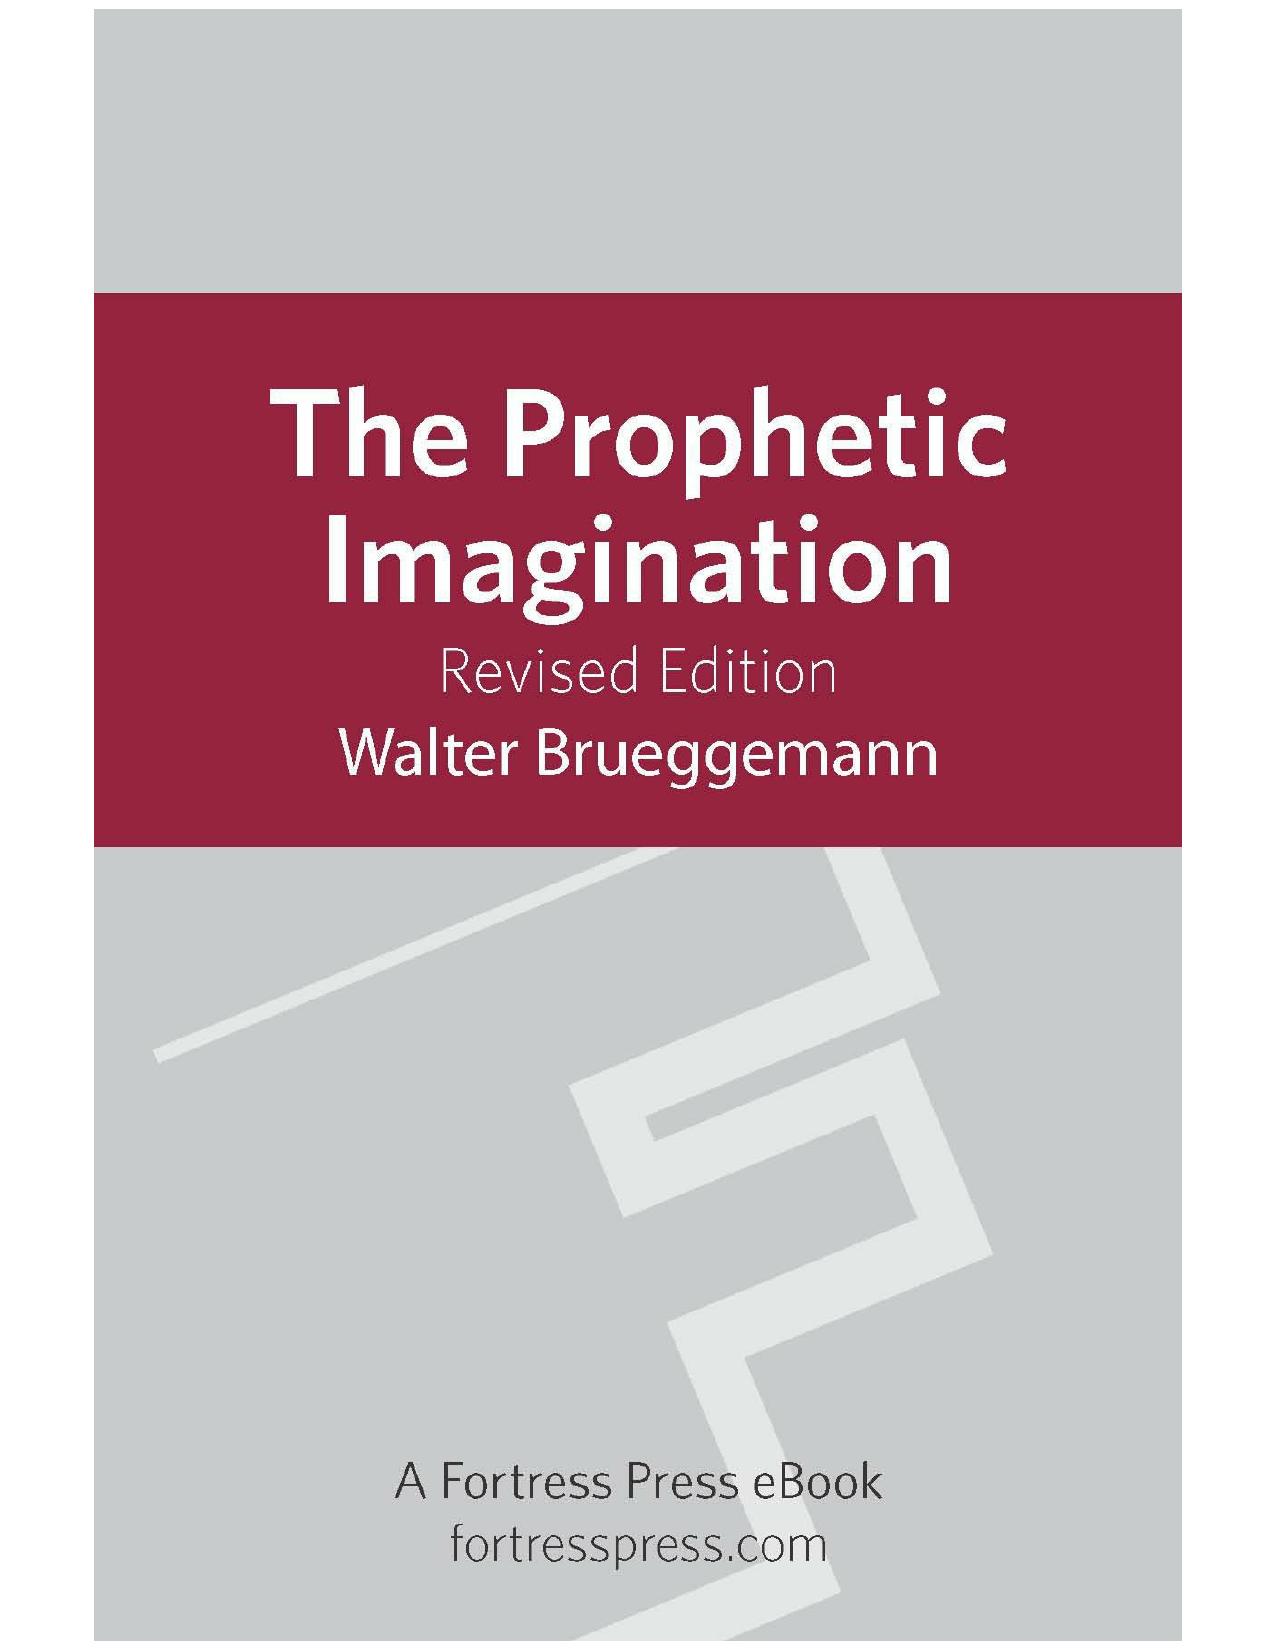 The Prophetic Imagination by Walter Brueggemann